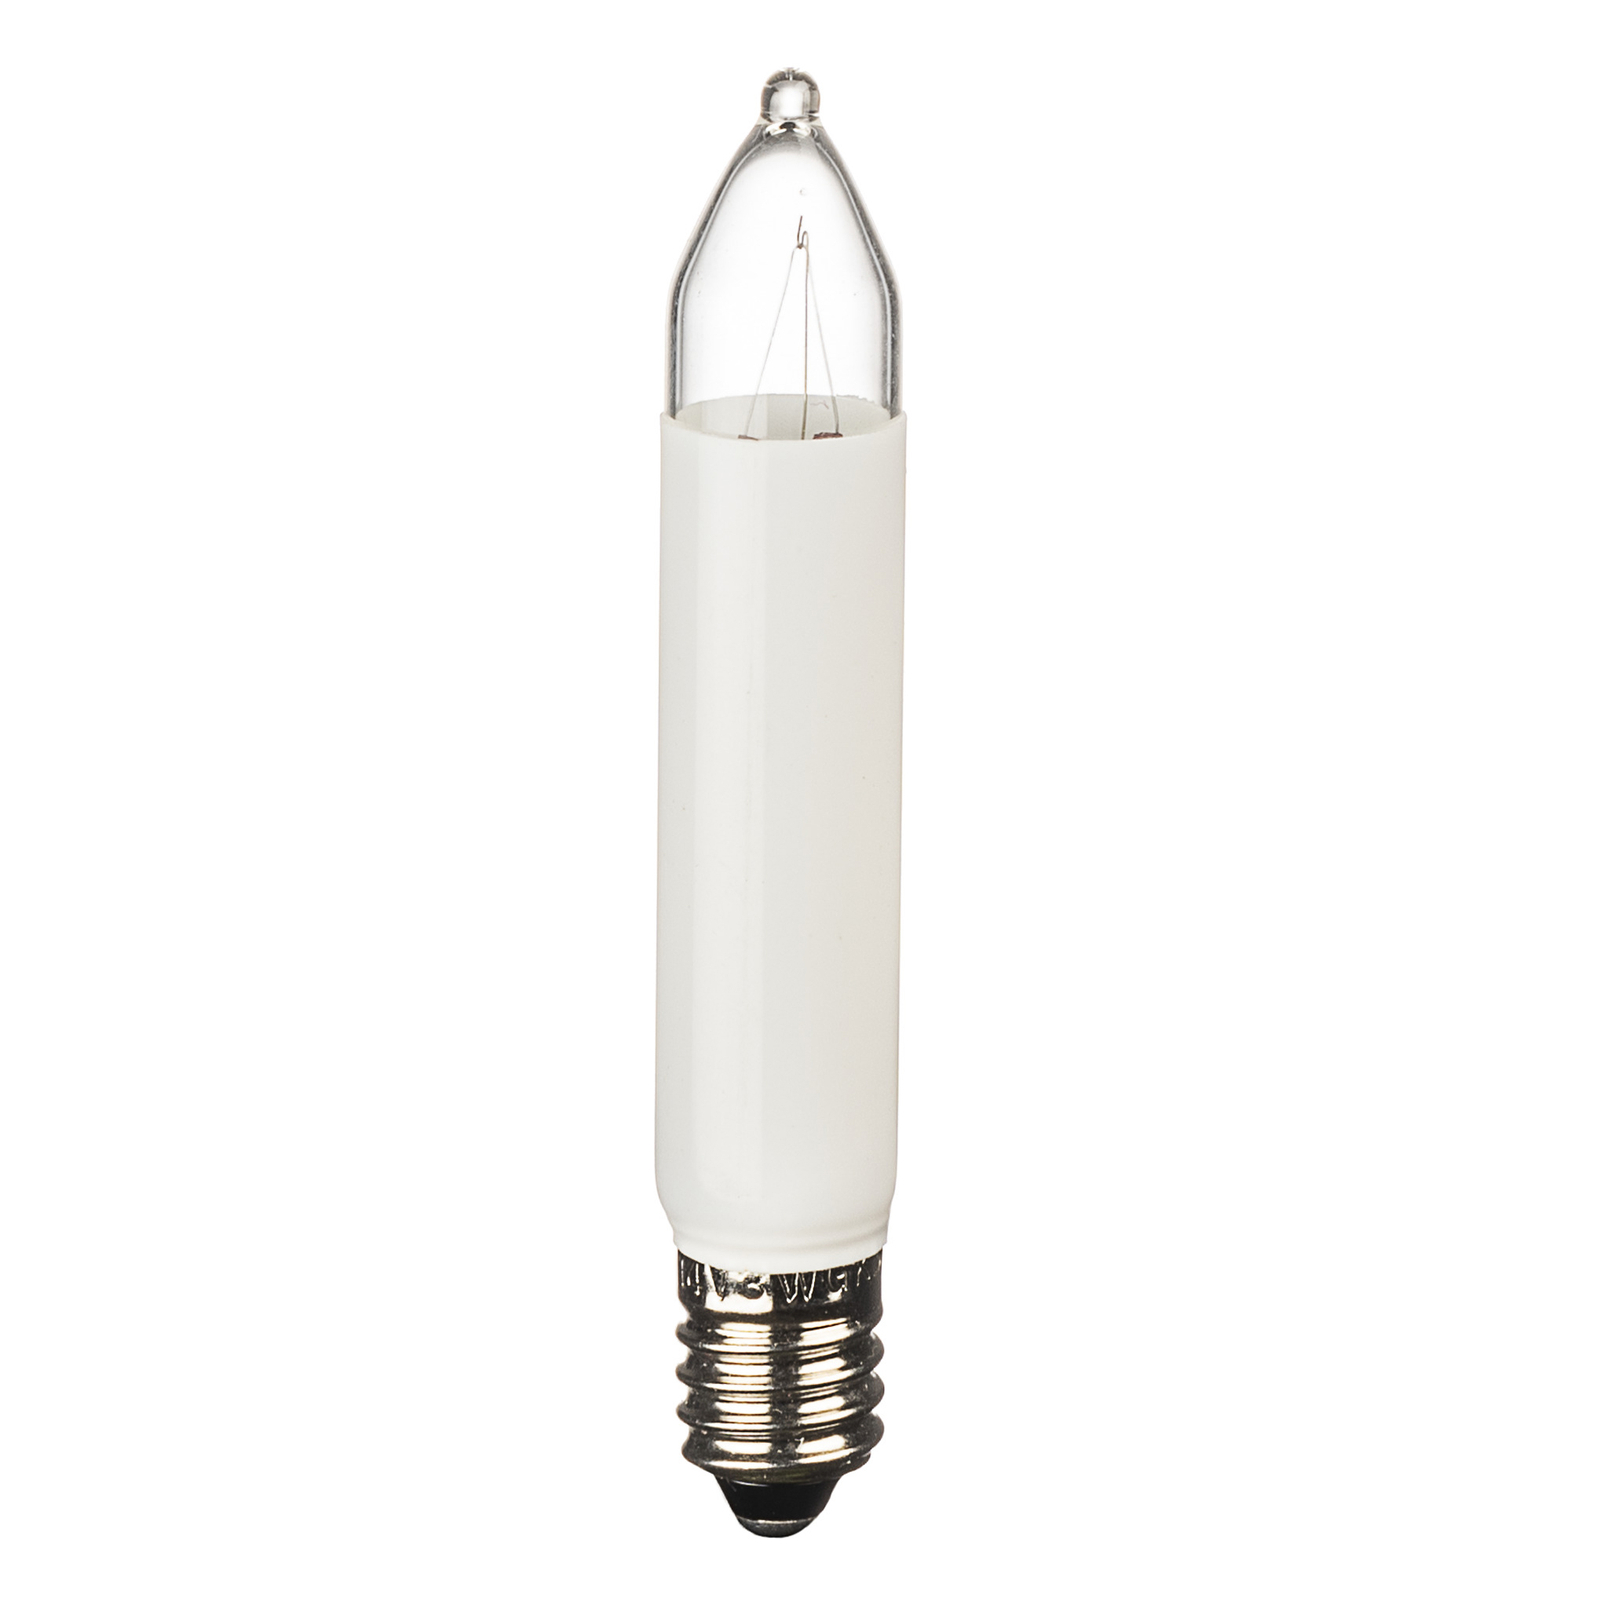 E10 3 W 14 V spare Xmas tree bulbs, pack of 2